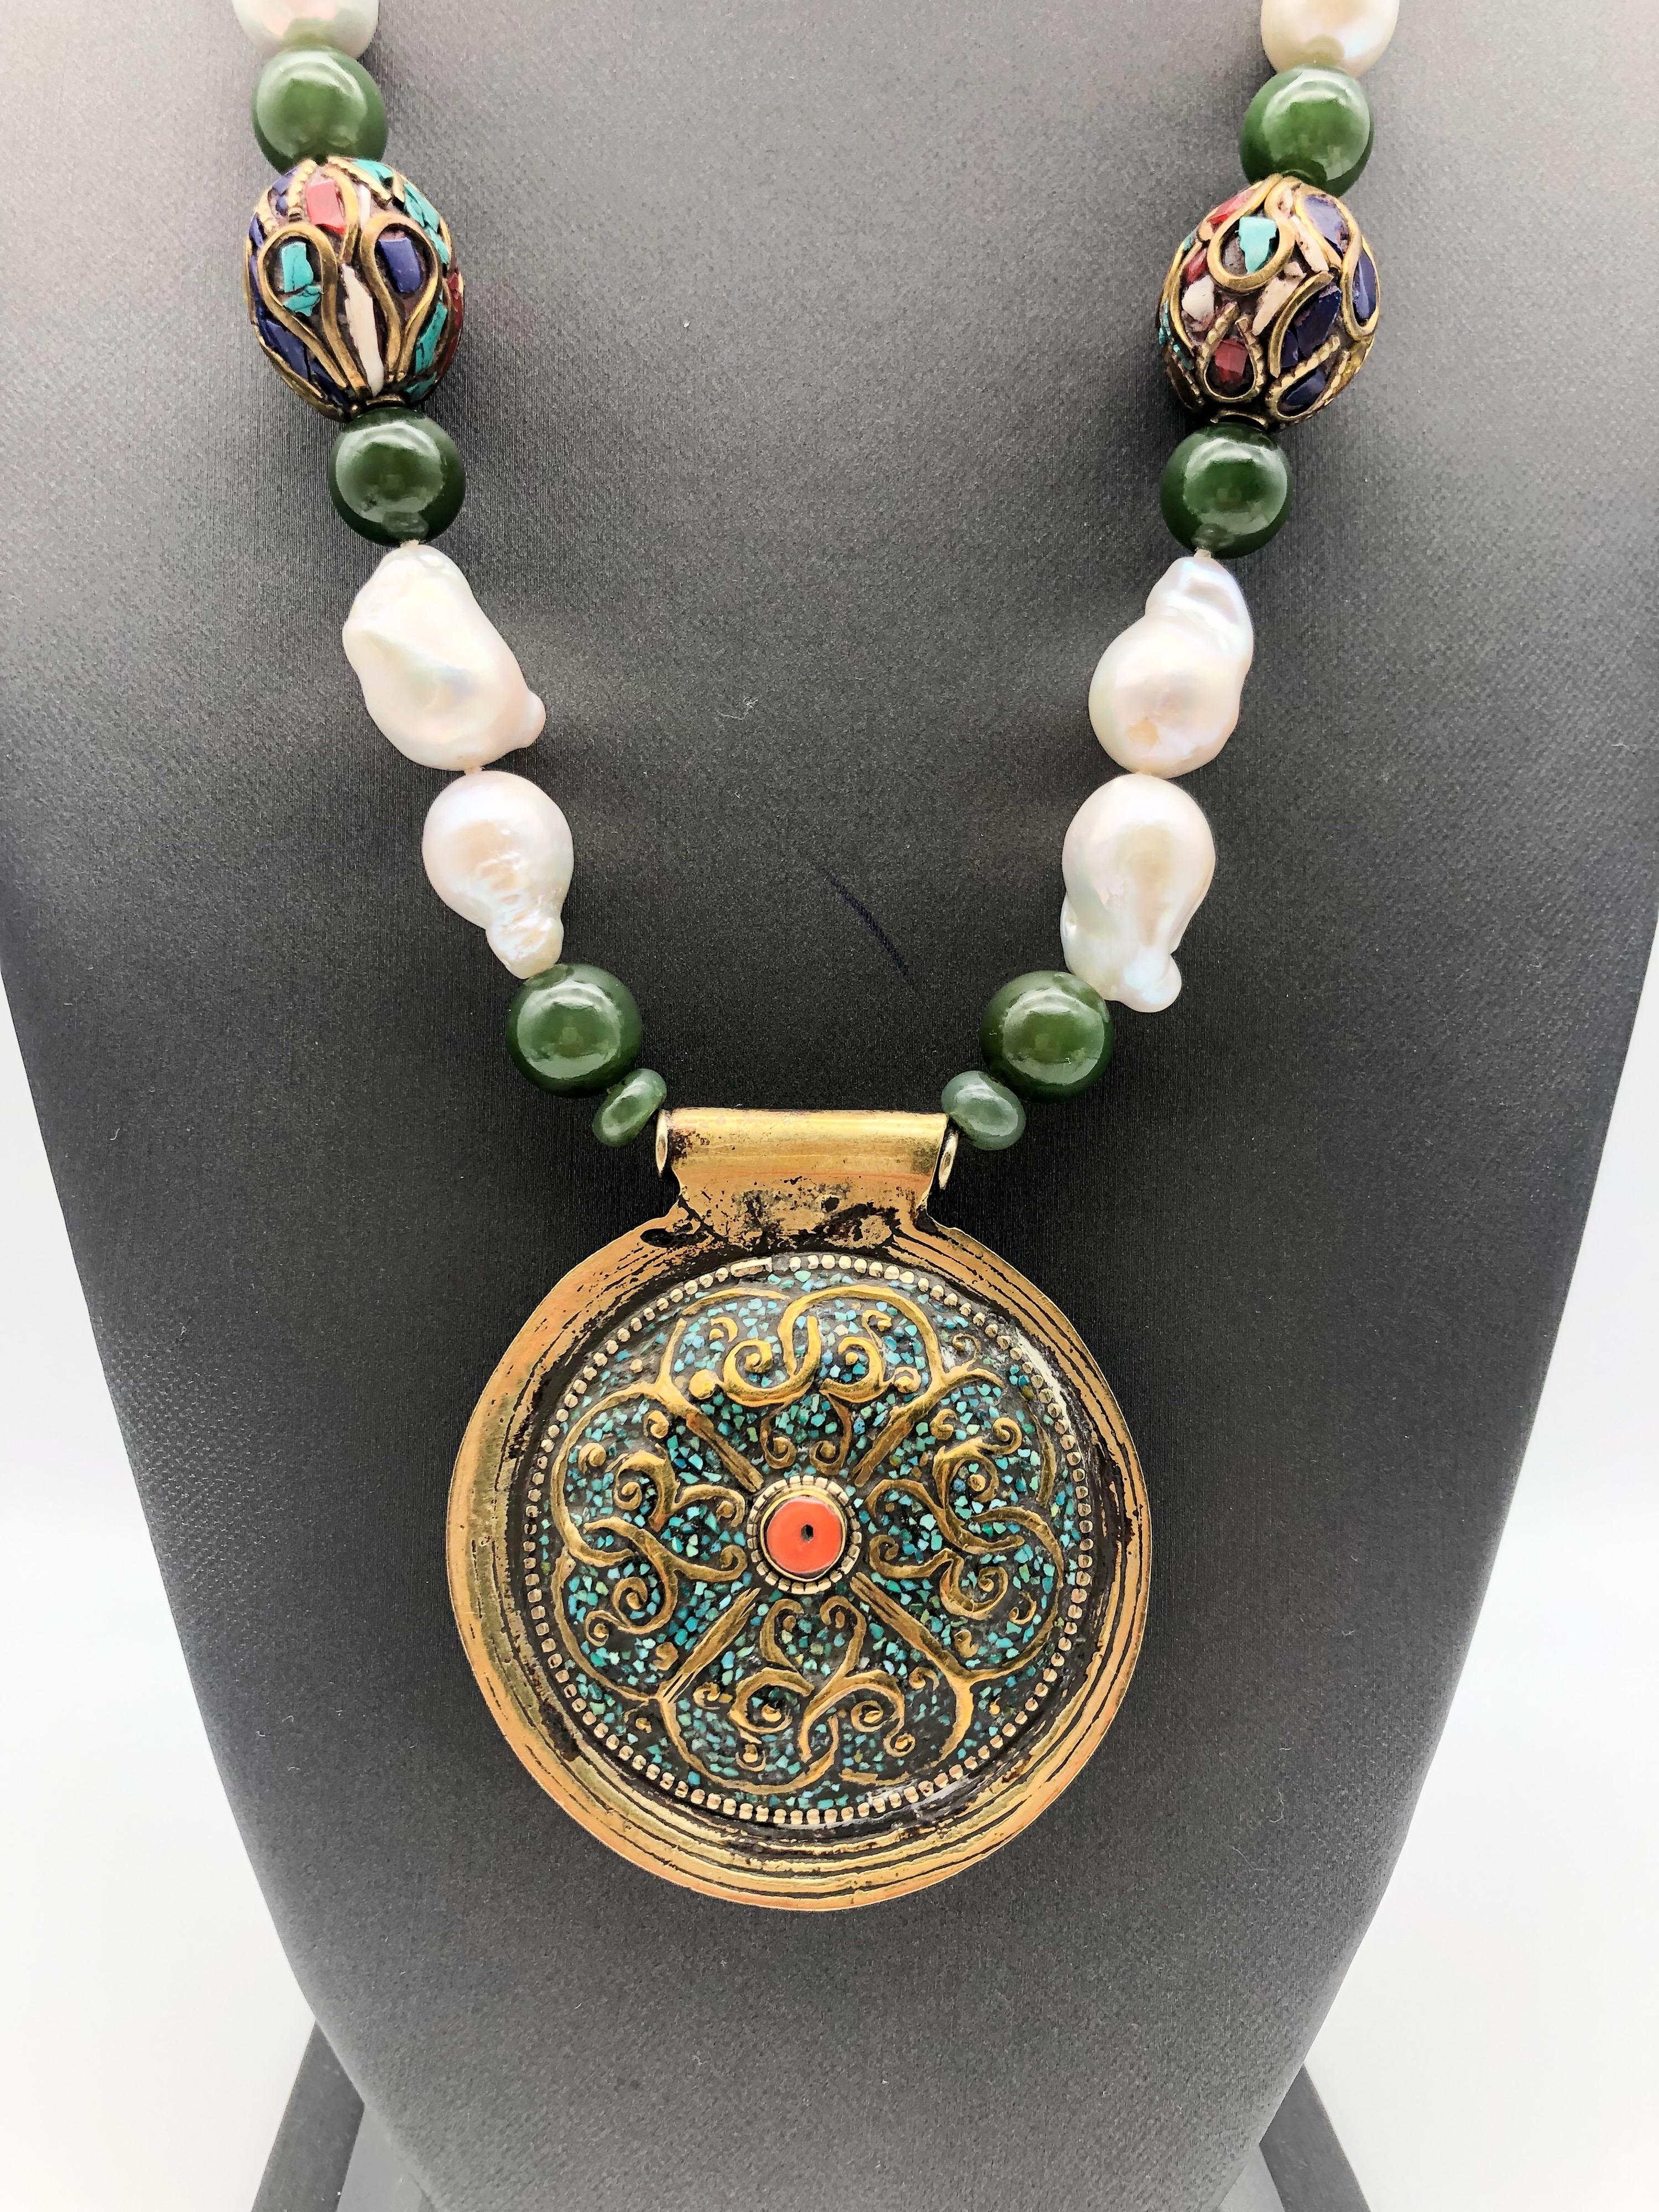 A.Jeschel Splendid Tibetan Pendant on Lustrous Baroque Pearl Necklace In New Condition For Sale In Miami, FL